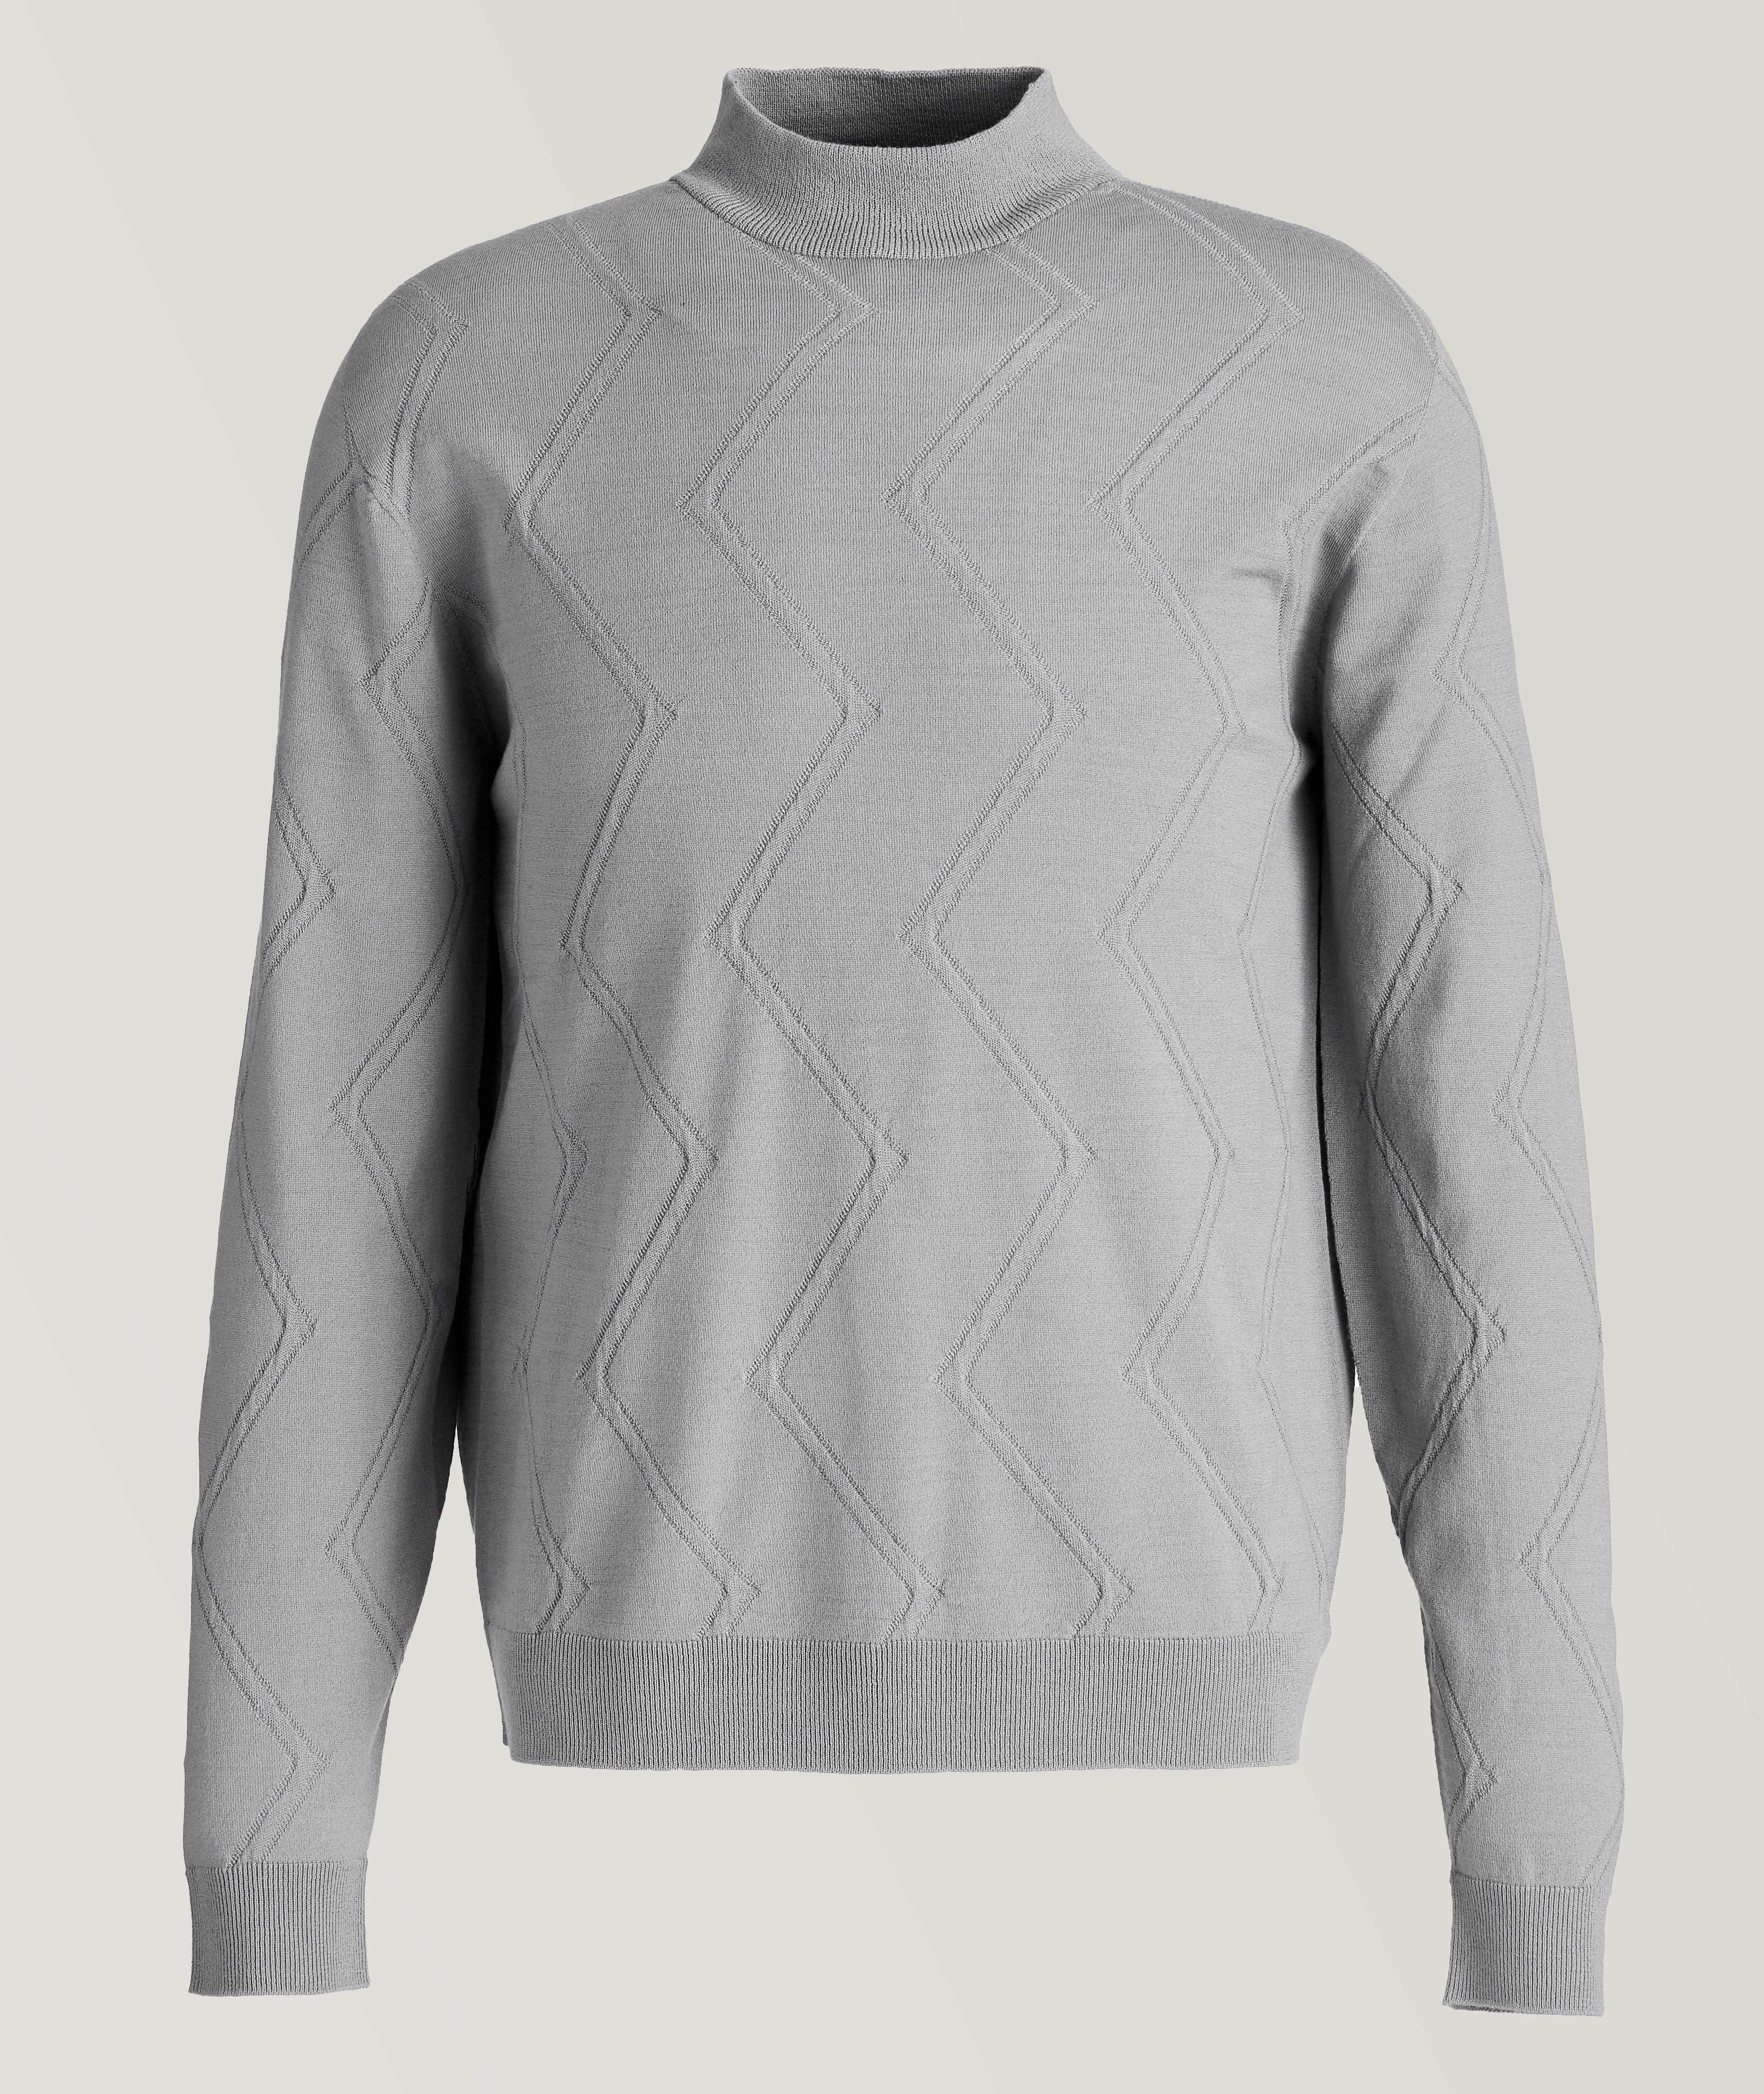 Wool-Blend Mock Neck Sweater image 0